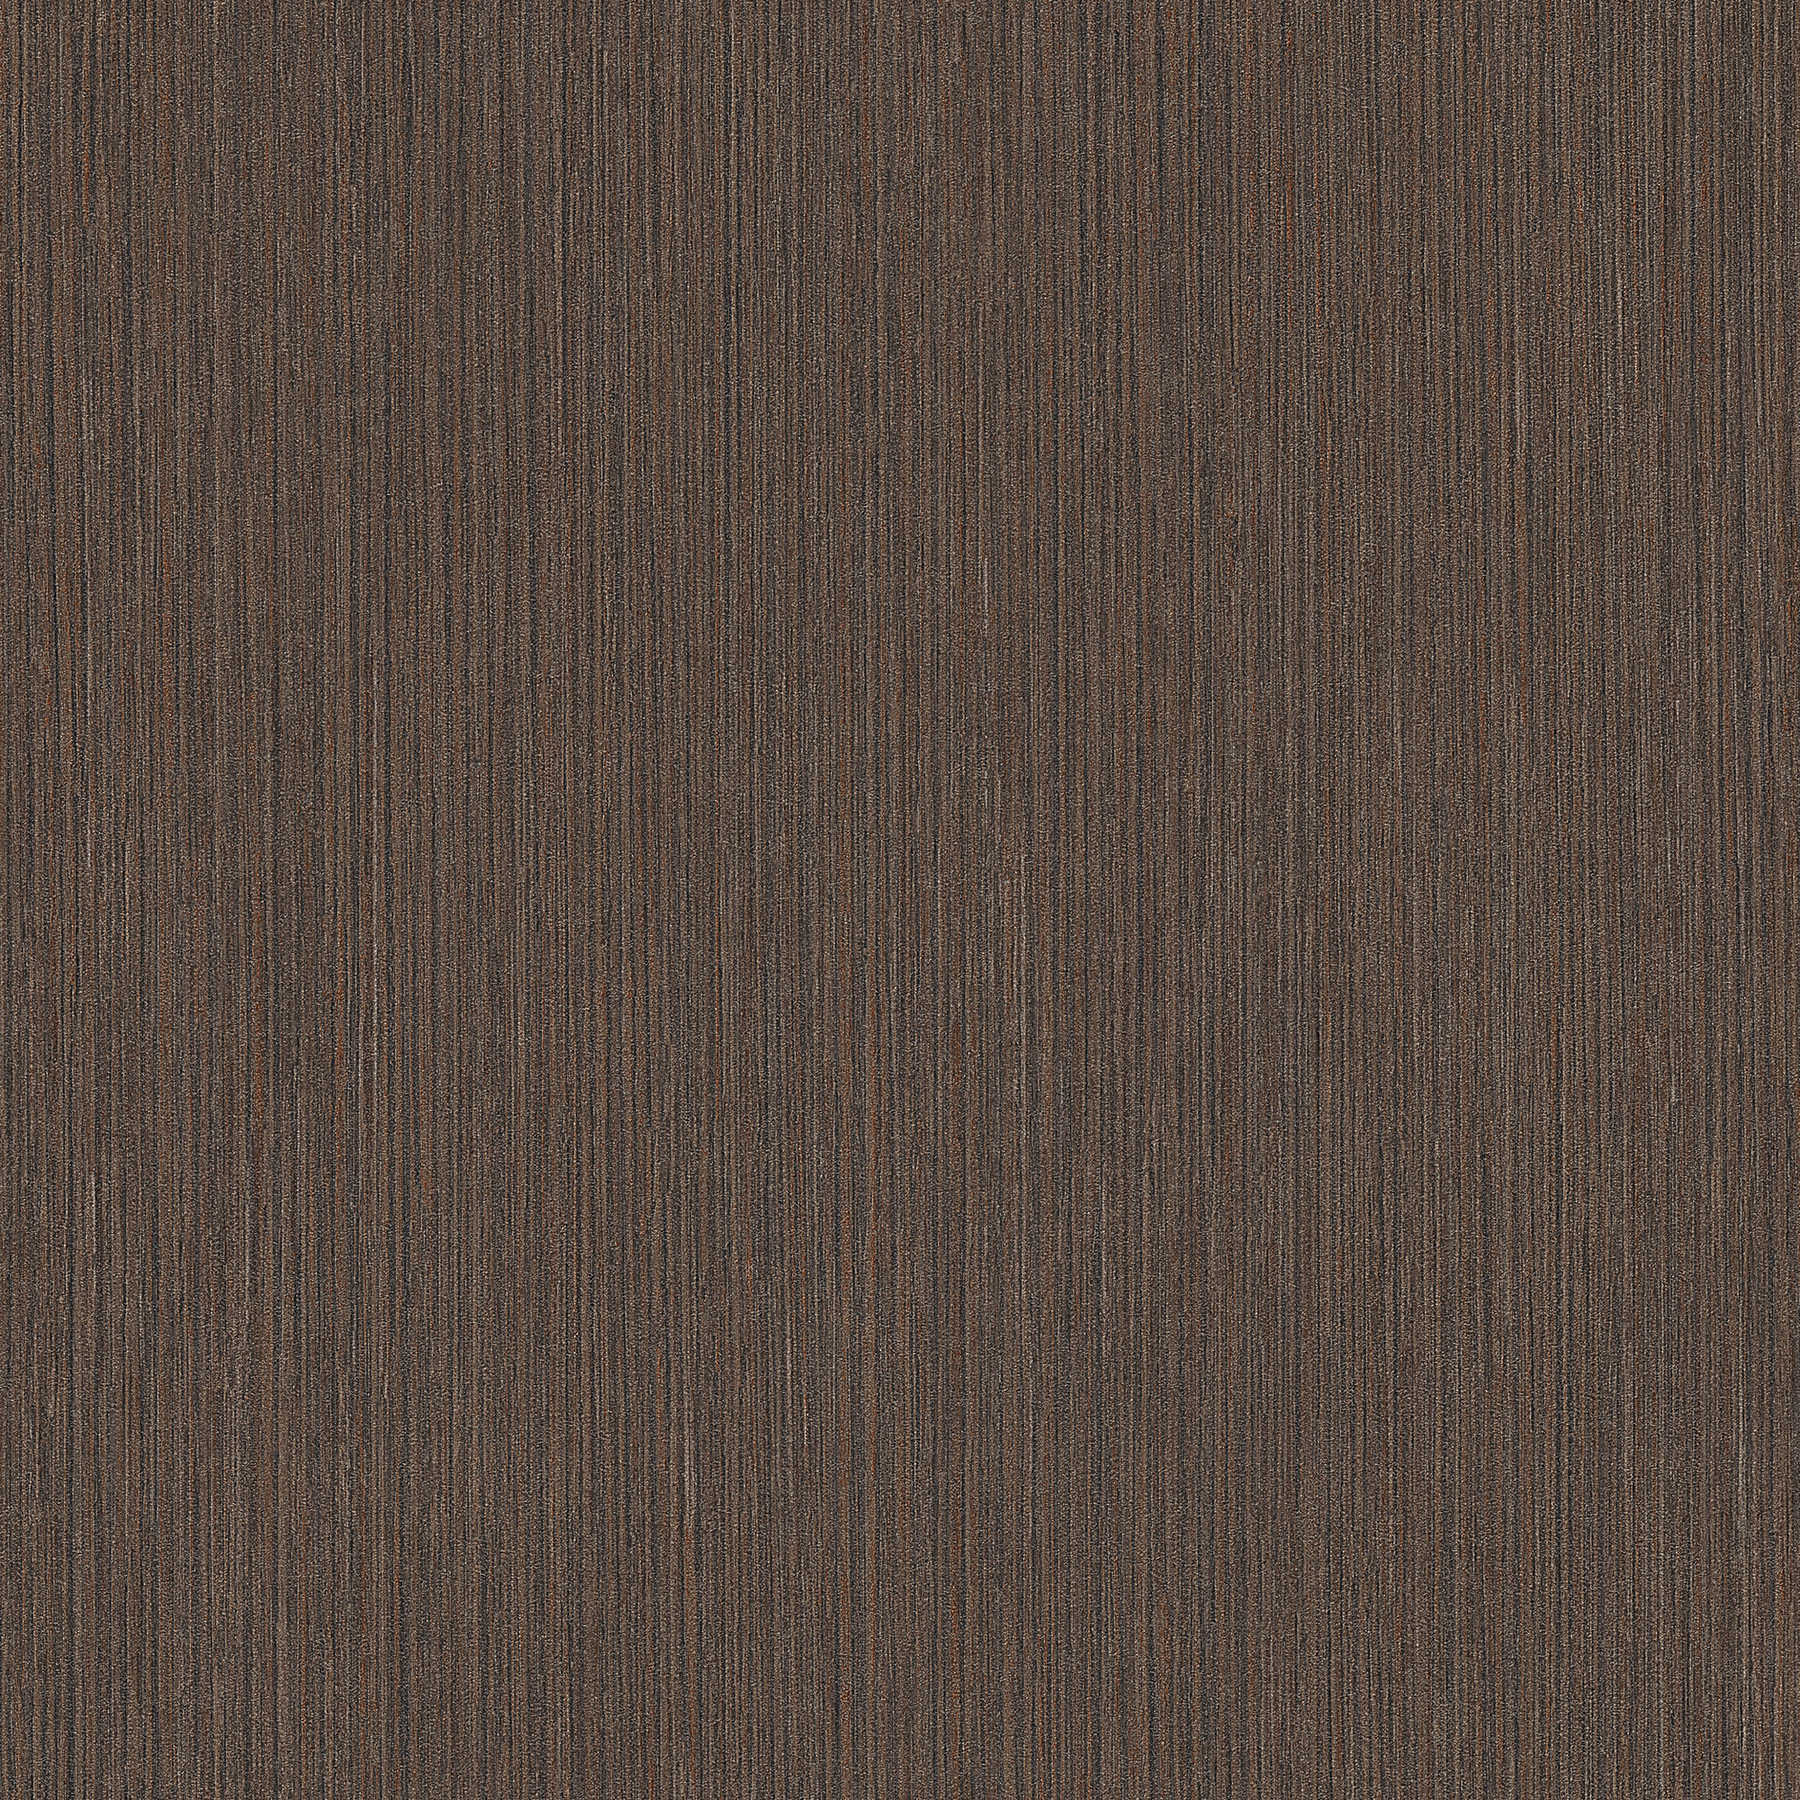 Non-woven wallpaper subtle stripes in textile design - brown
